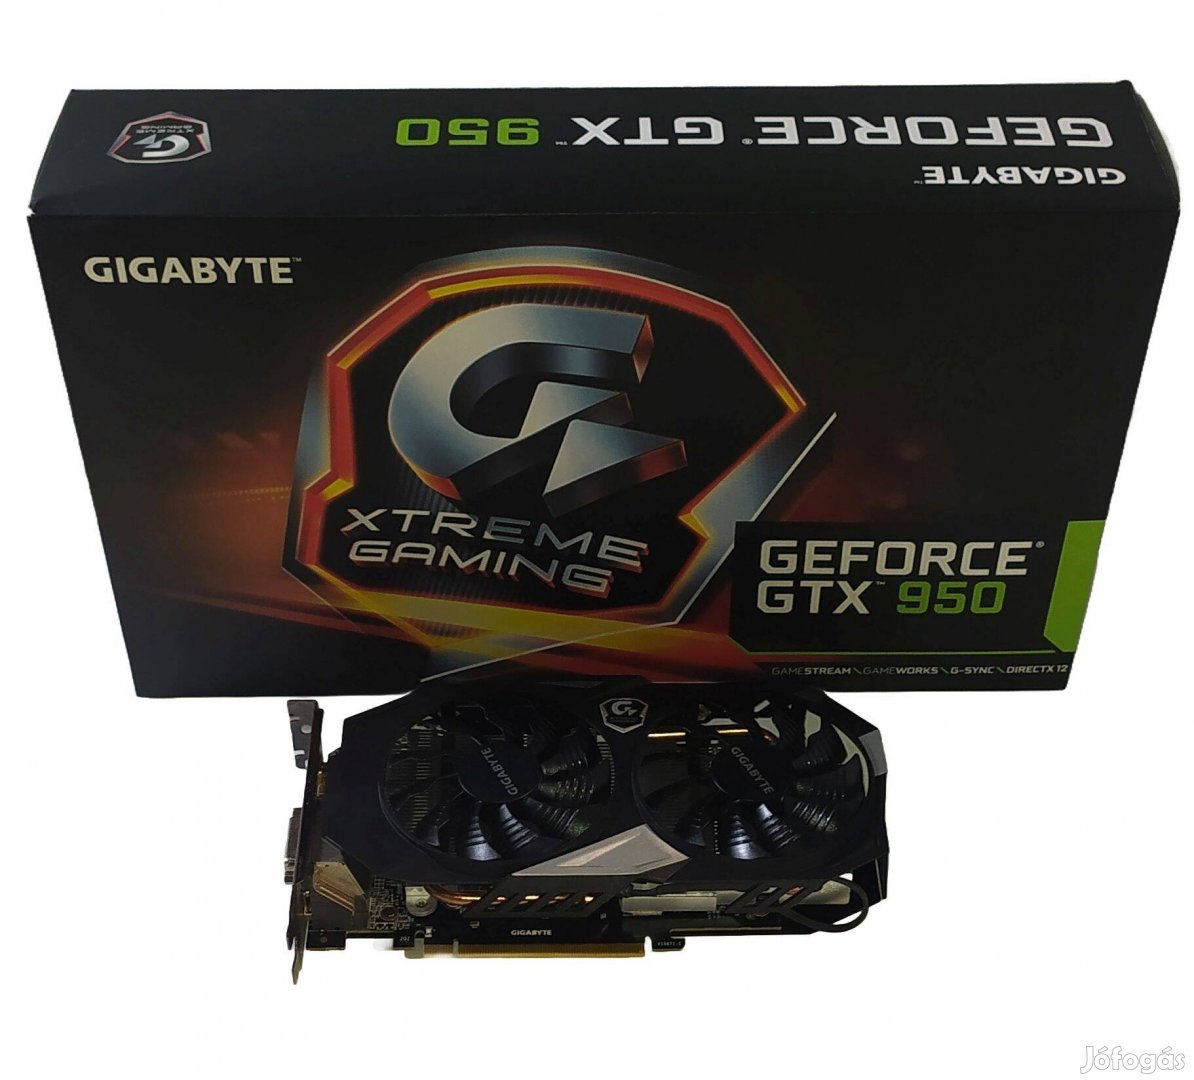 Gigabyte Geforce Gtx950 Xtreme Gaming 2GB 128bit Gddr5 PCI-E videókárt